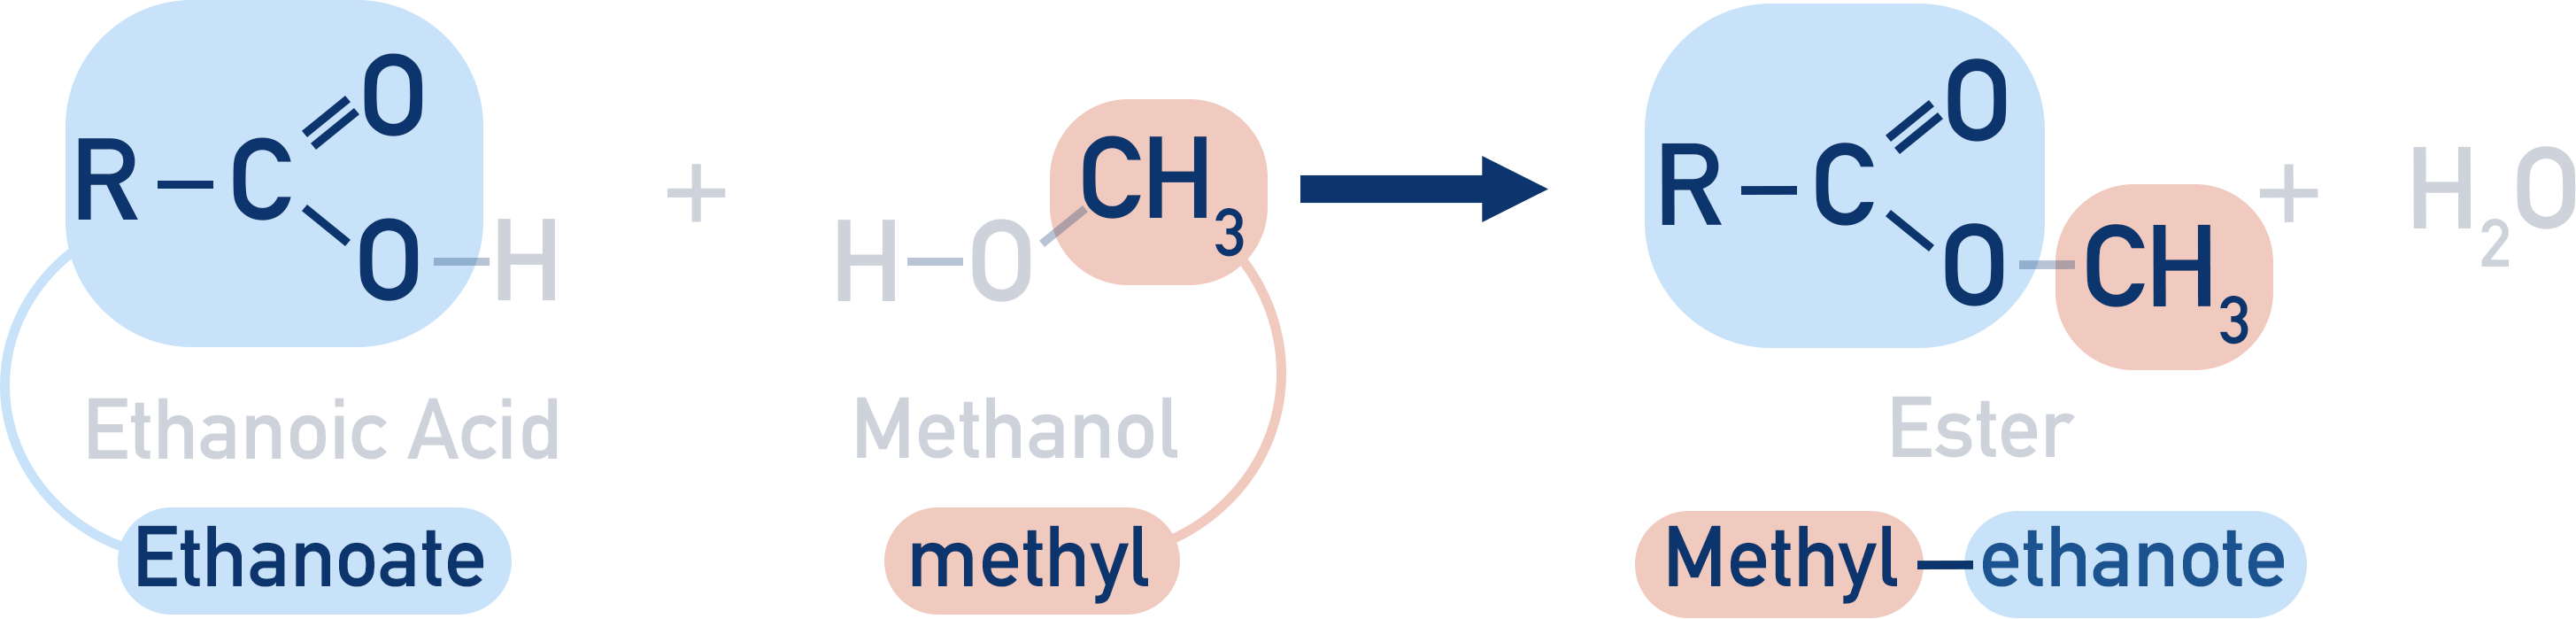 how to name methyl-ethanoate ester ethanoic acid and methanol